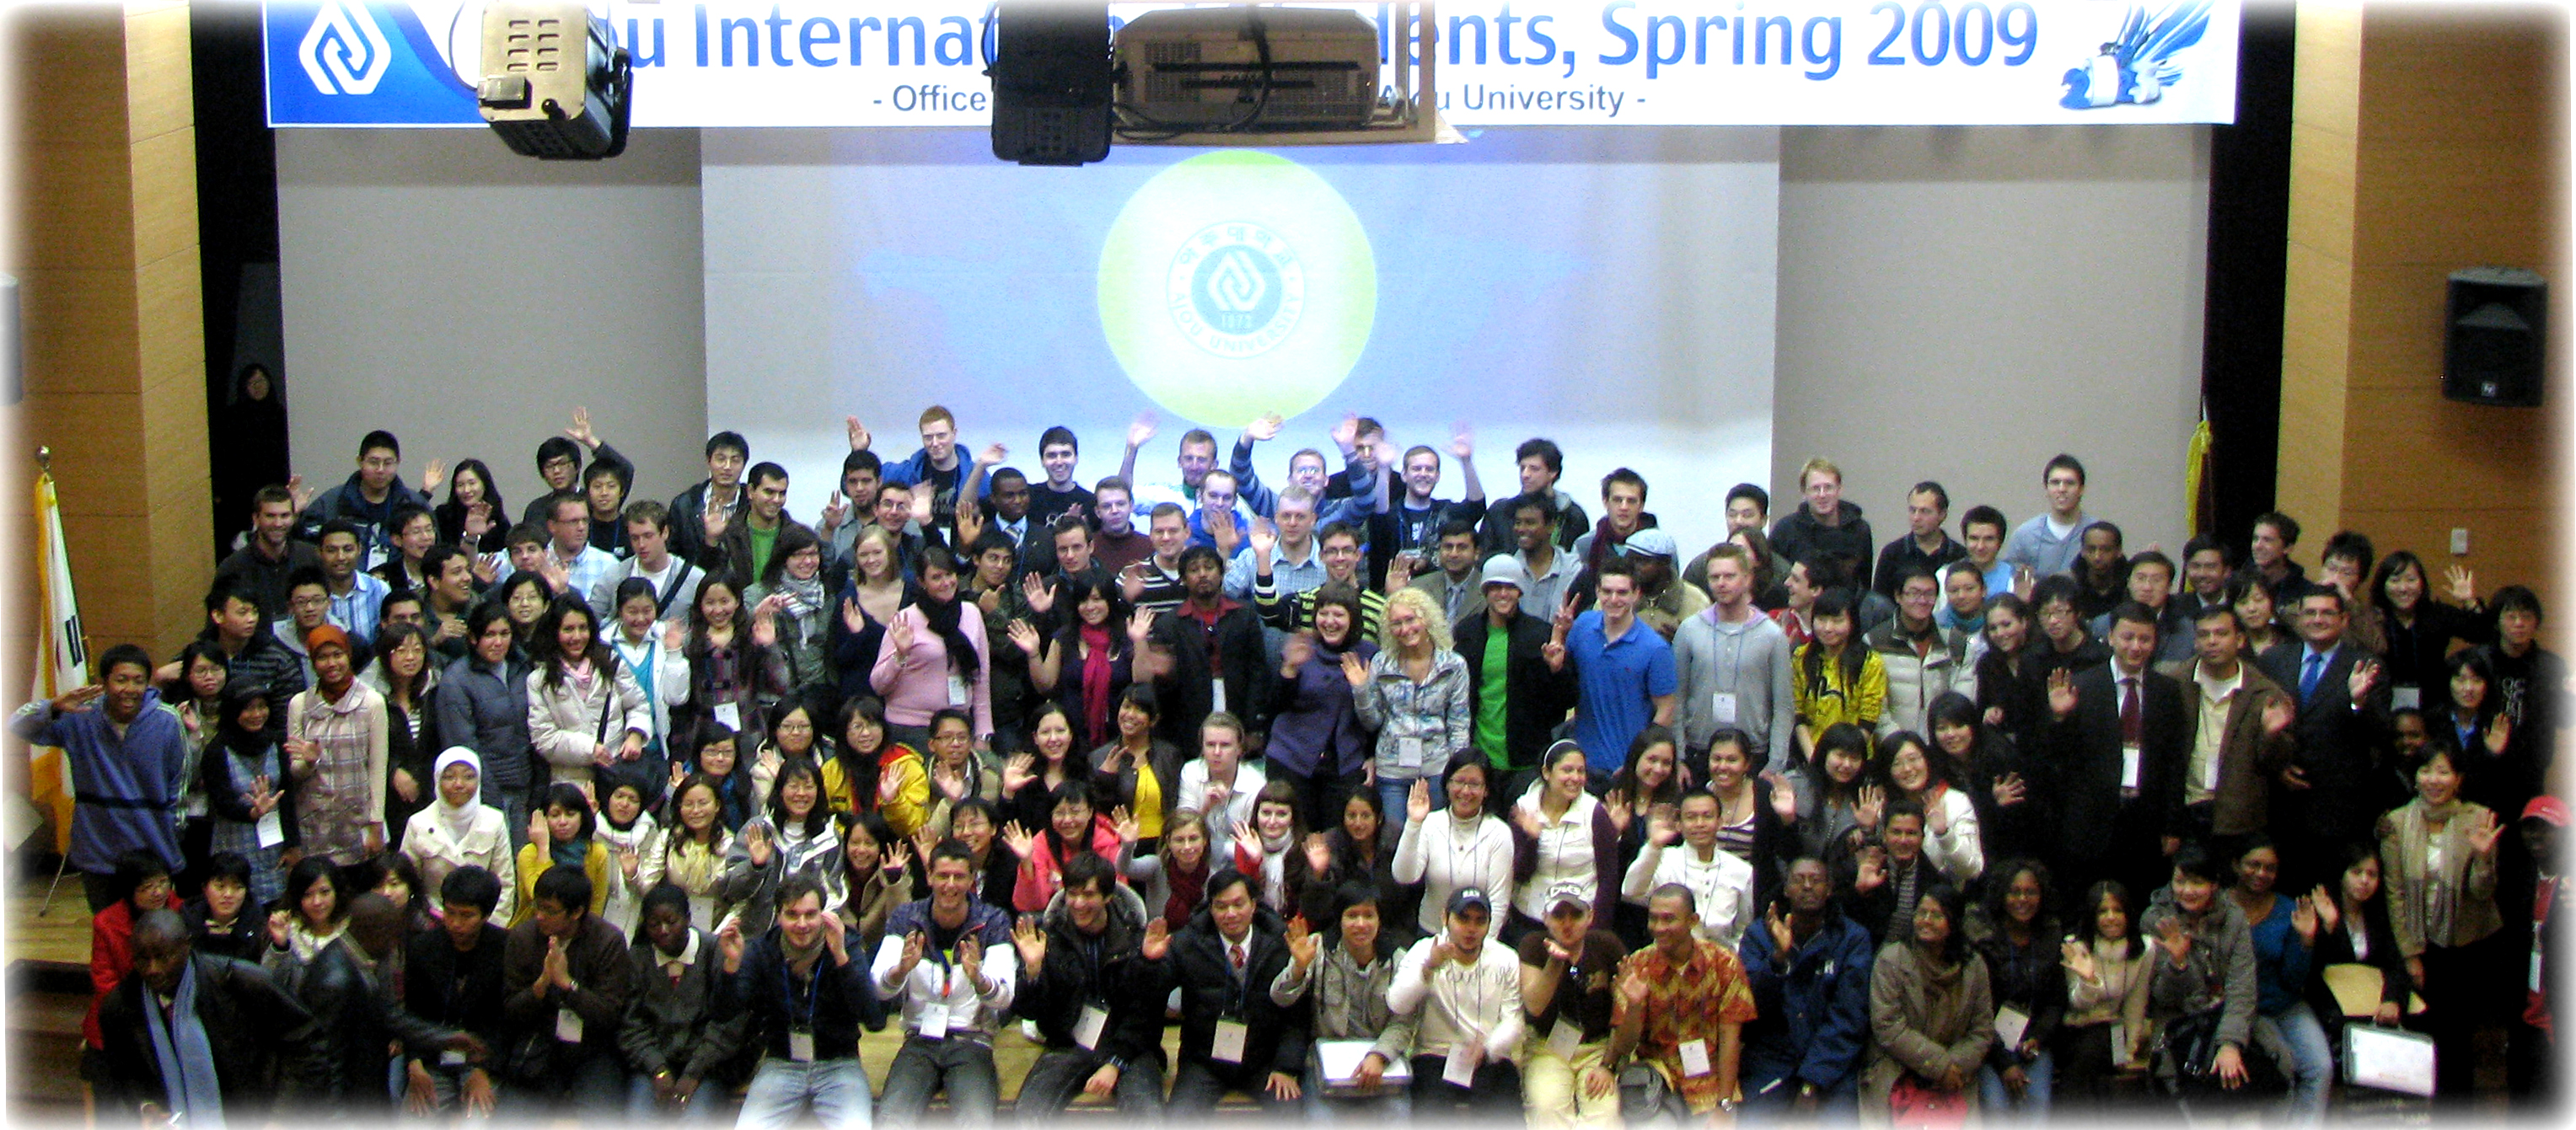 Orientation for International students for 2009 spring semester